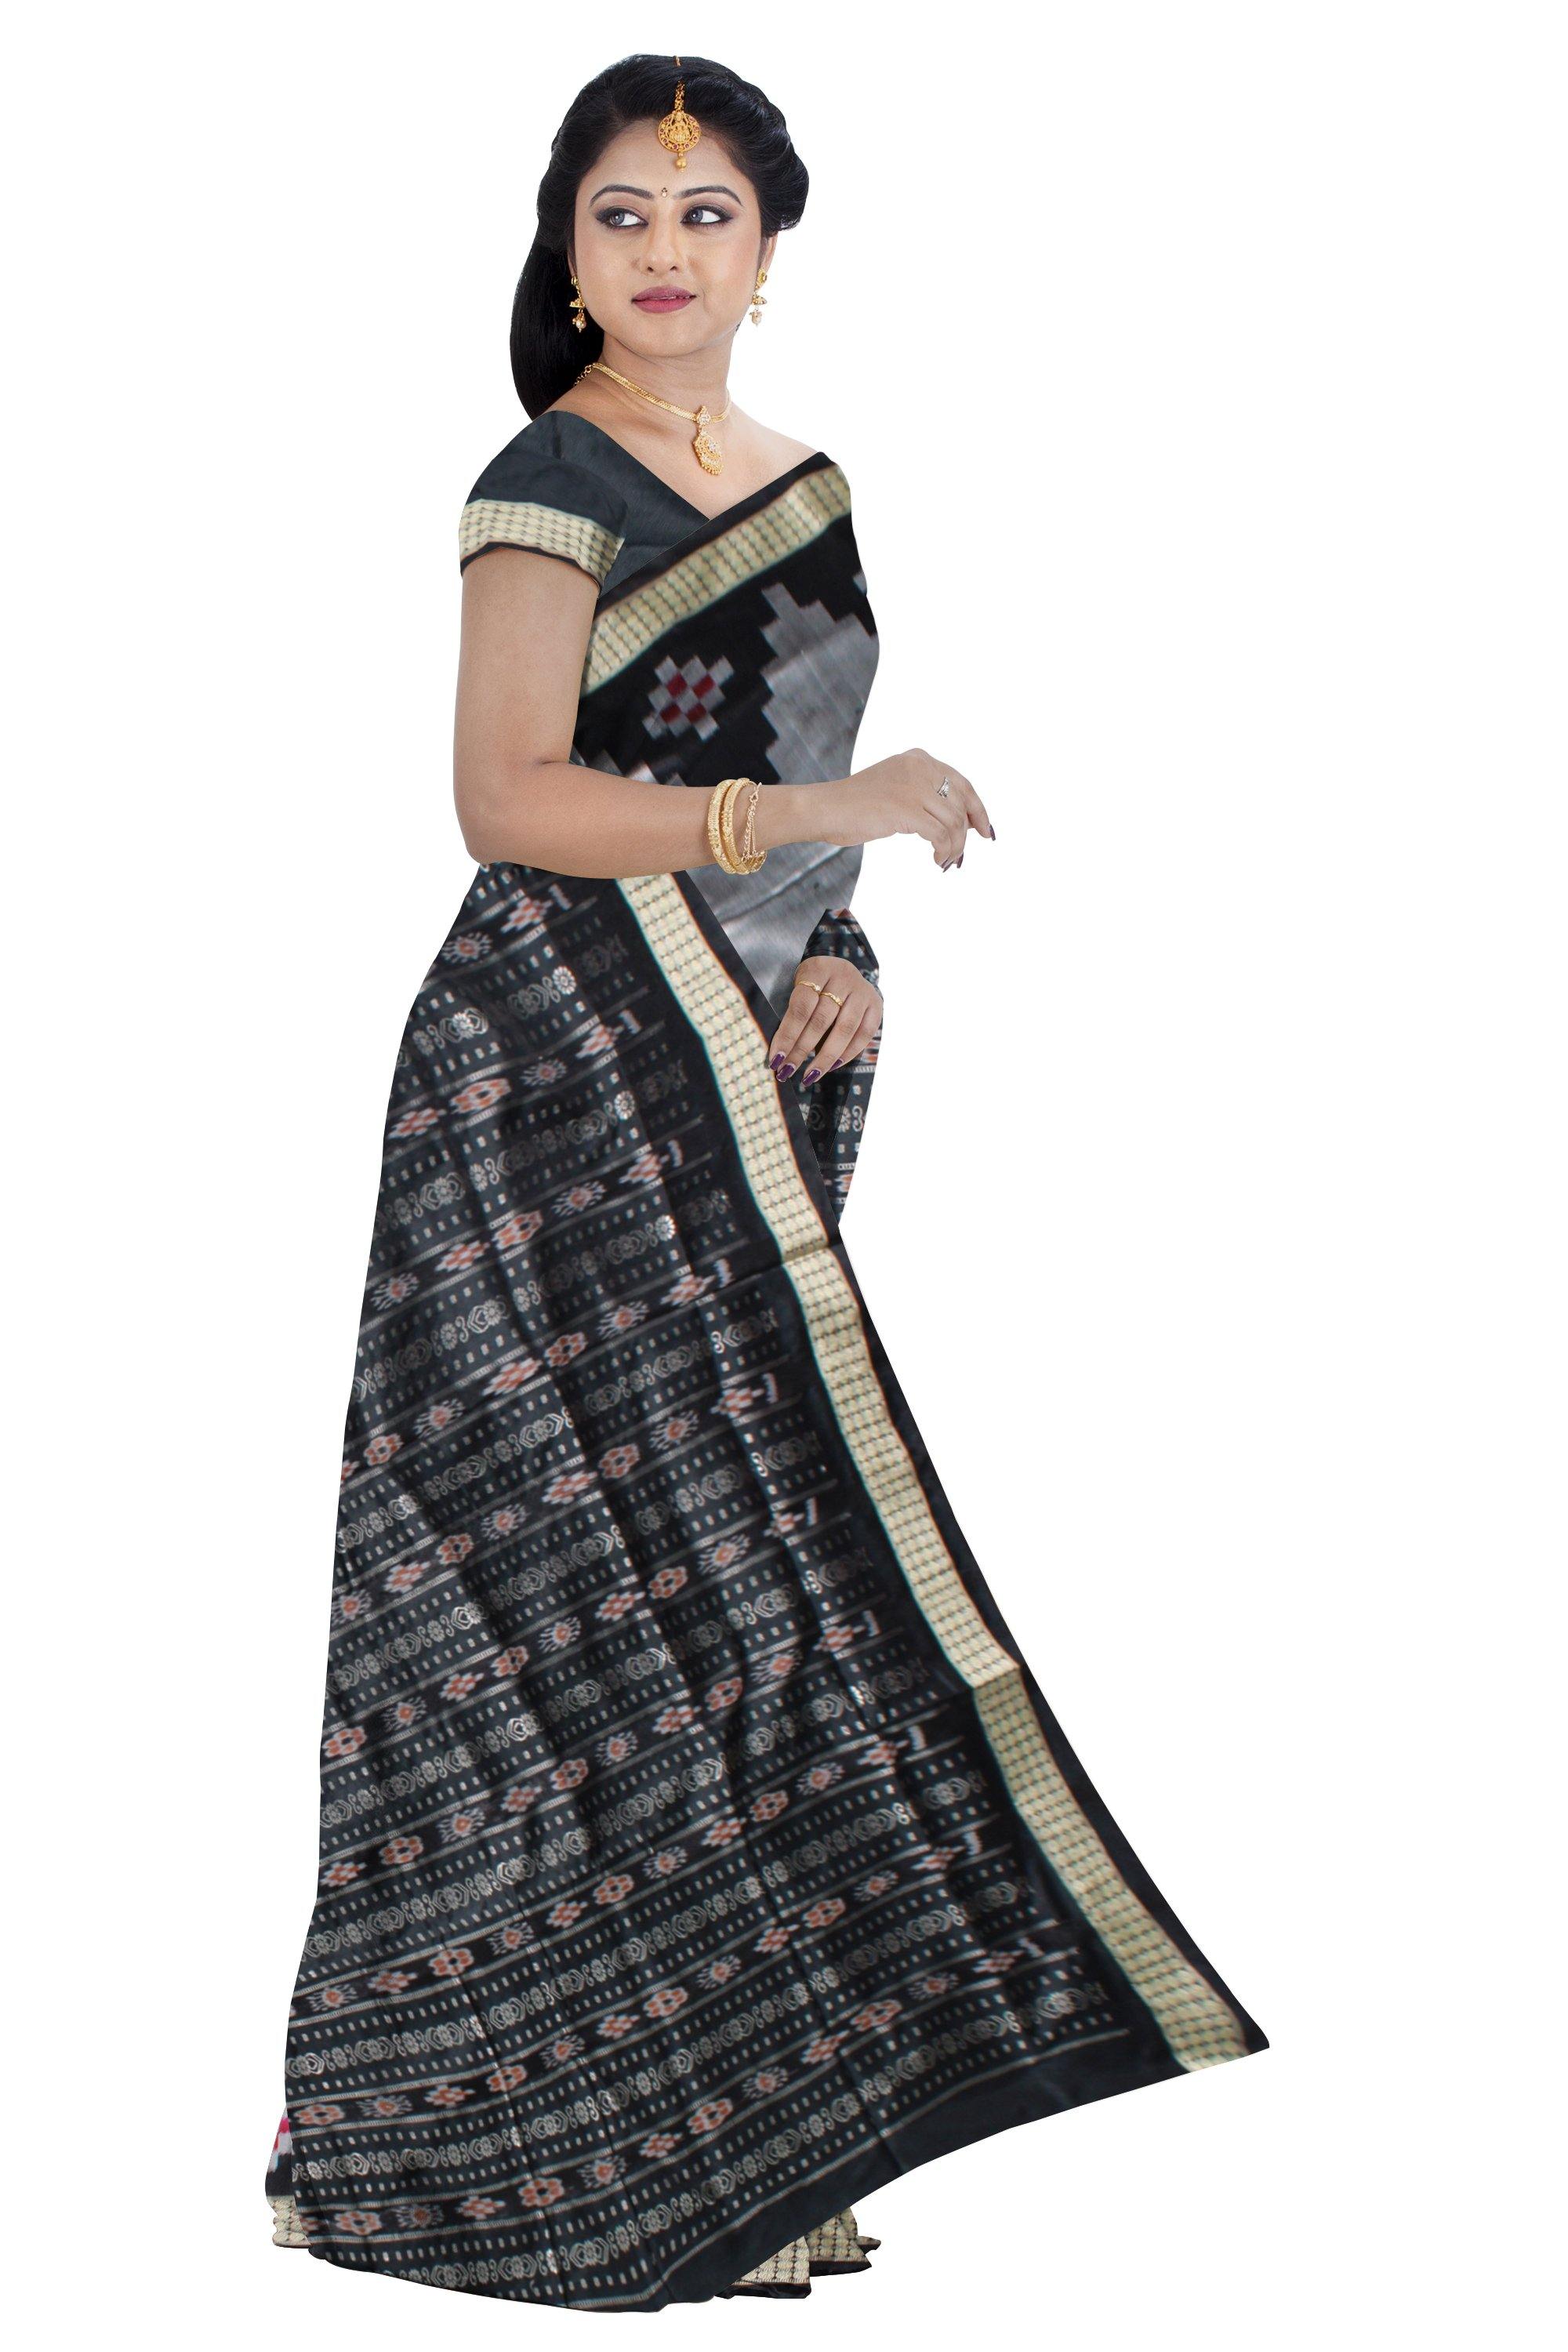 Pasapali kumbha design pata saree in gray color with blouse piece. - Koshali Arts & Crafts Enterprise